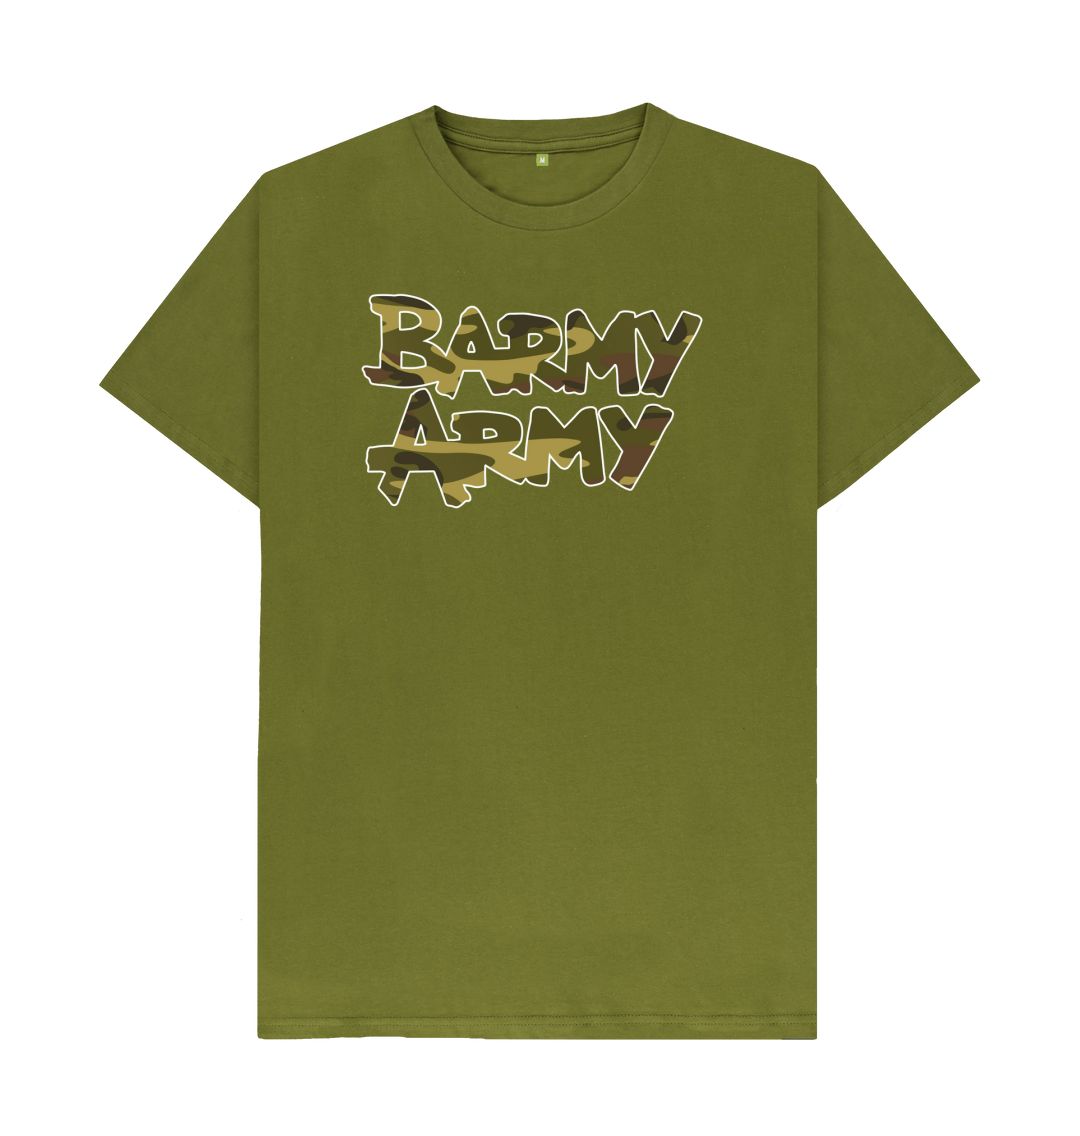 Moss Green Barmy Army Camo Logo Tee